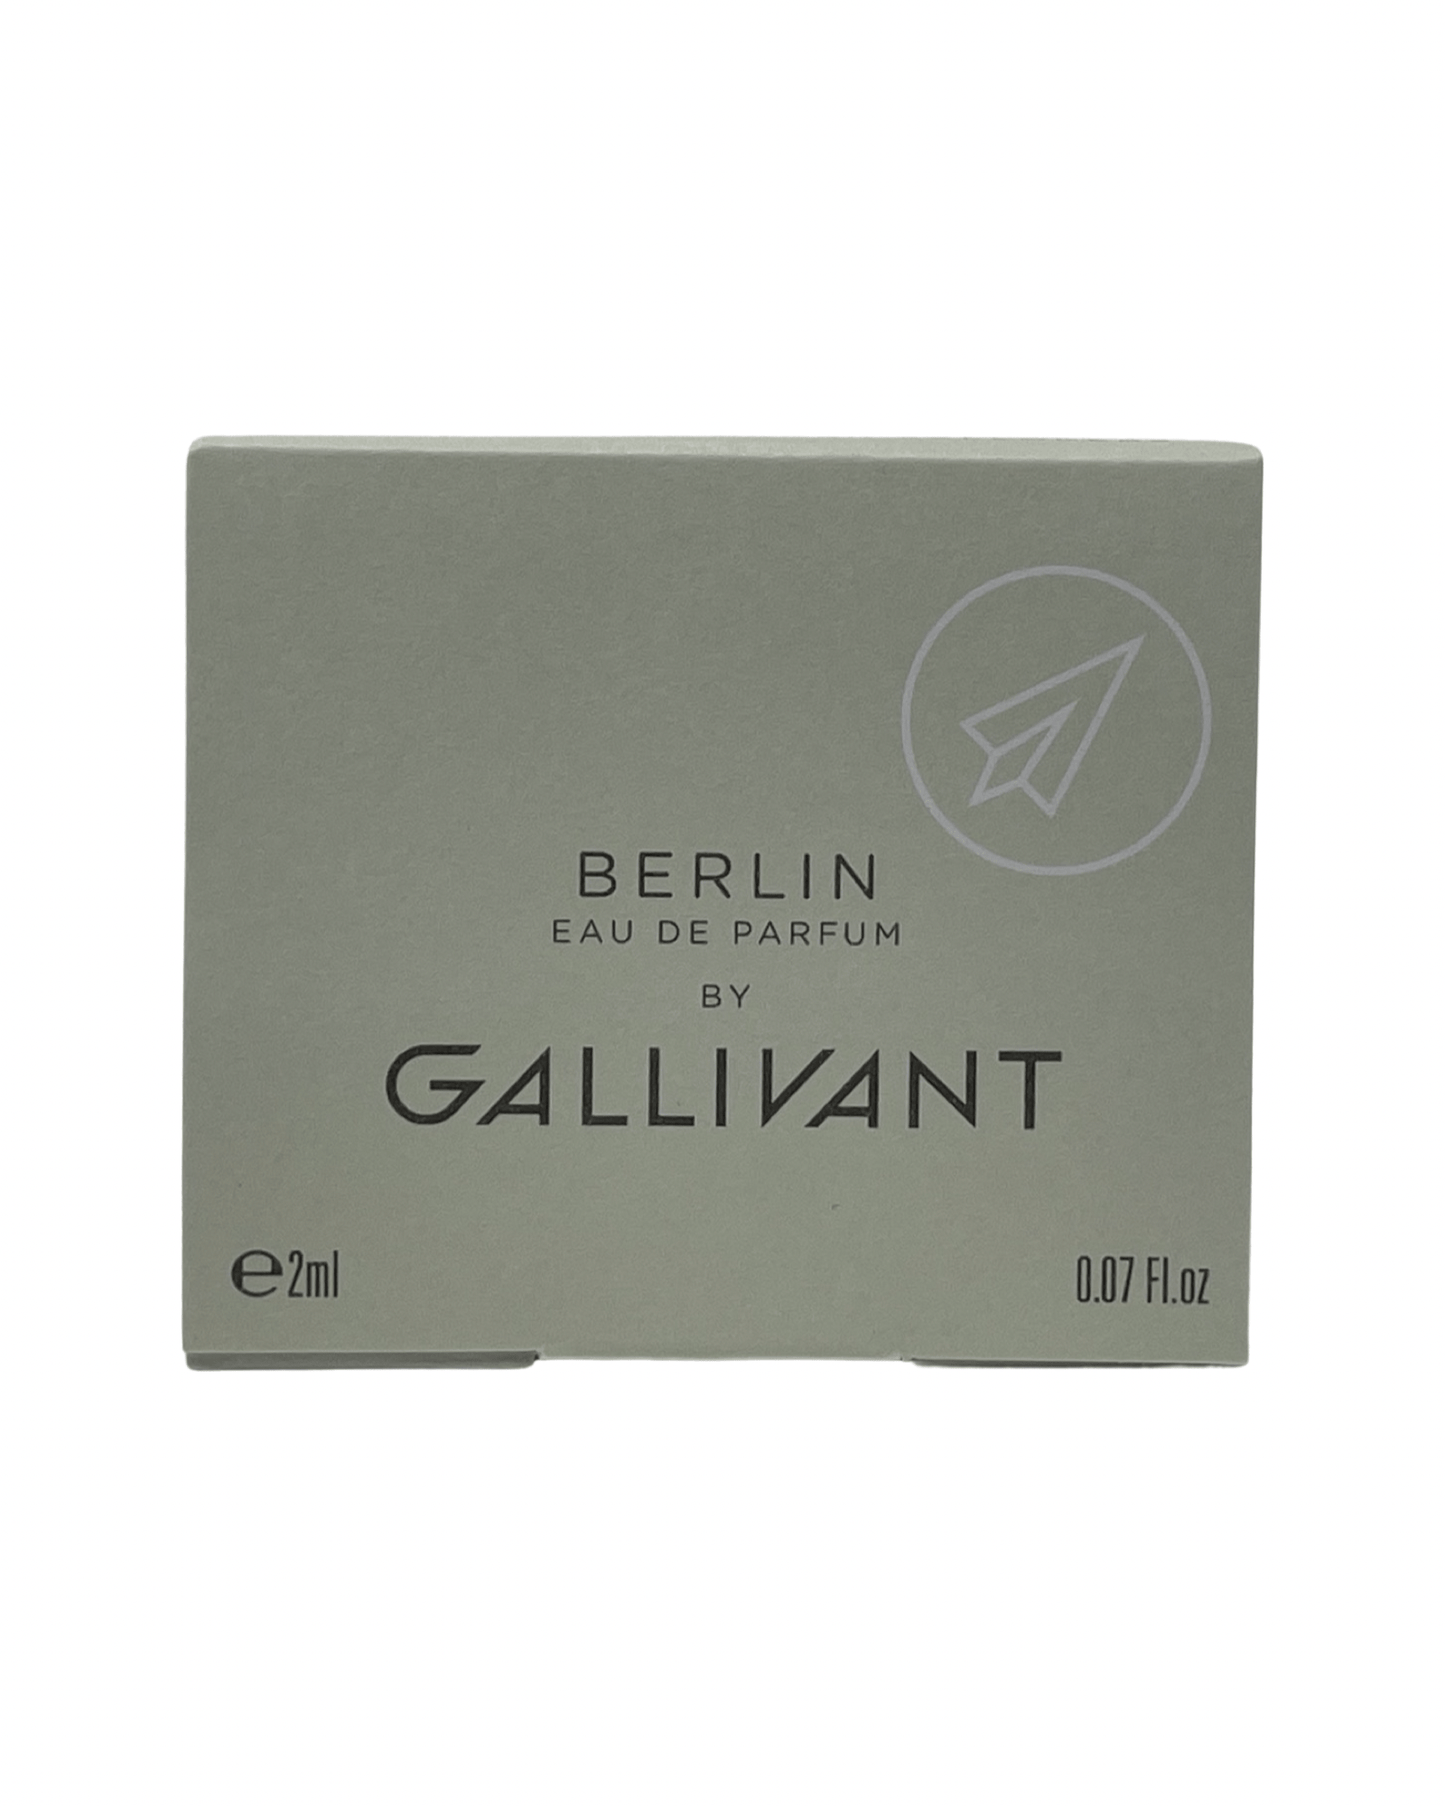 Gallivant - Berlin - 2ml.